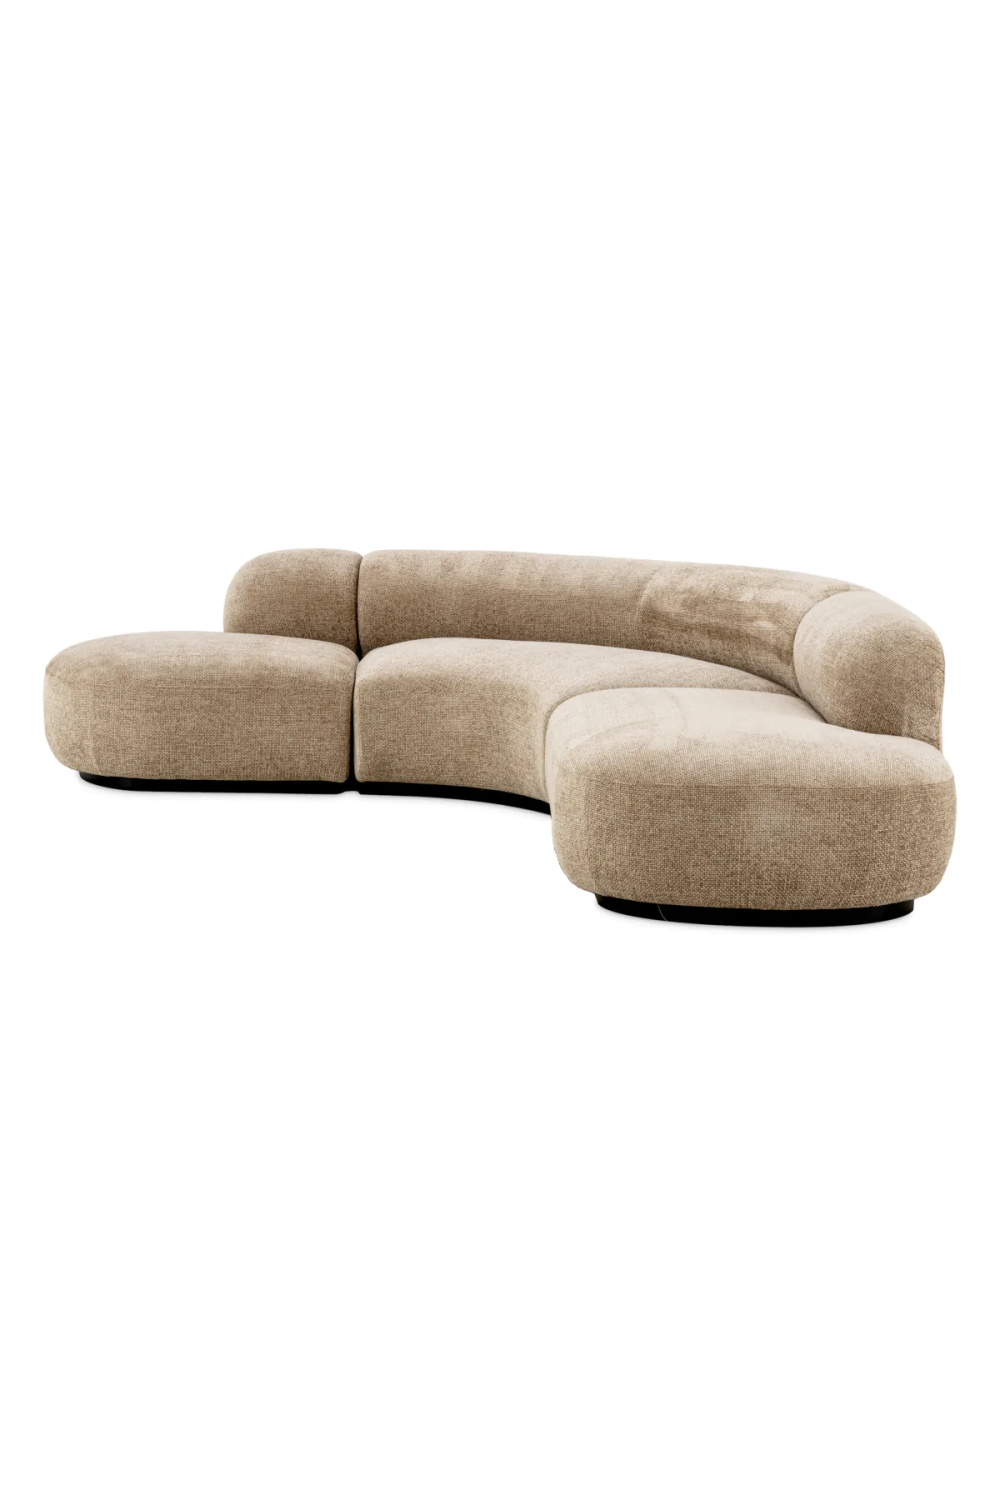 Beige Curved Modern Sofa | Eichholtz Björn | Oroa.com